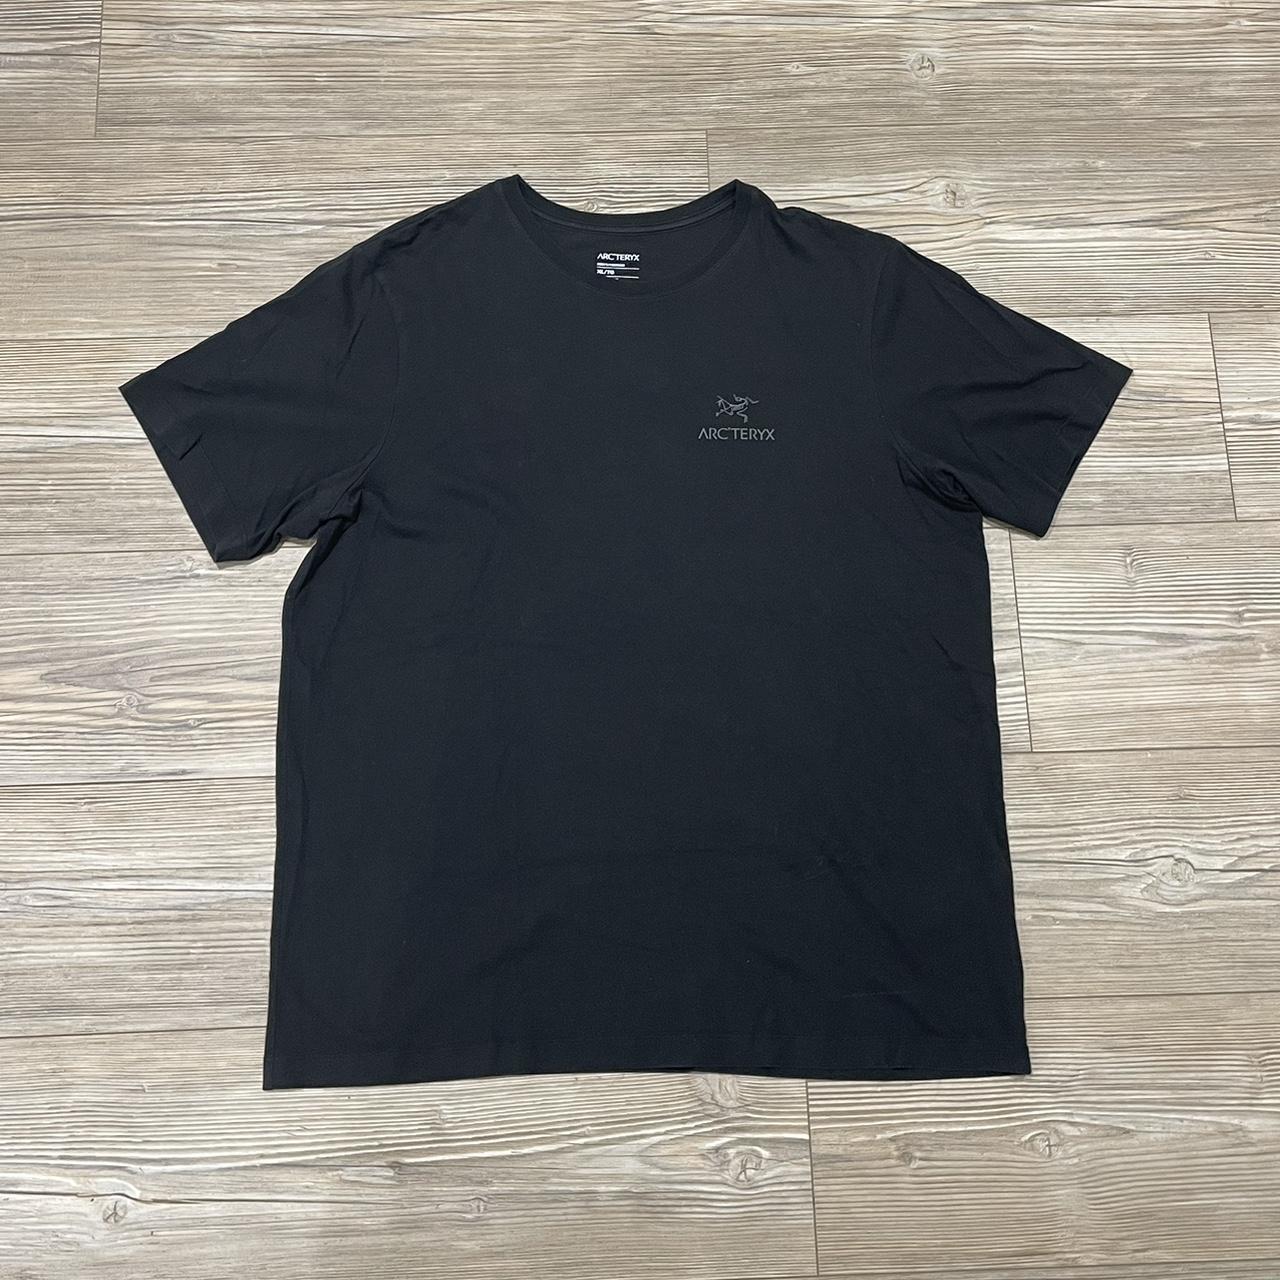 Arc’teryx T-shirt Black on grey print, more like... - Depop